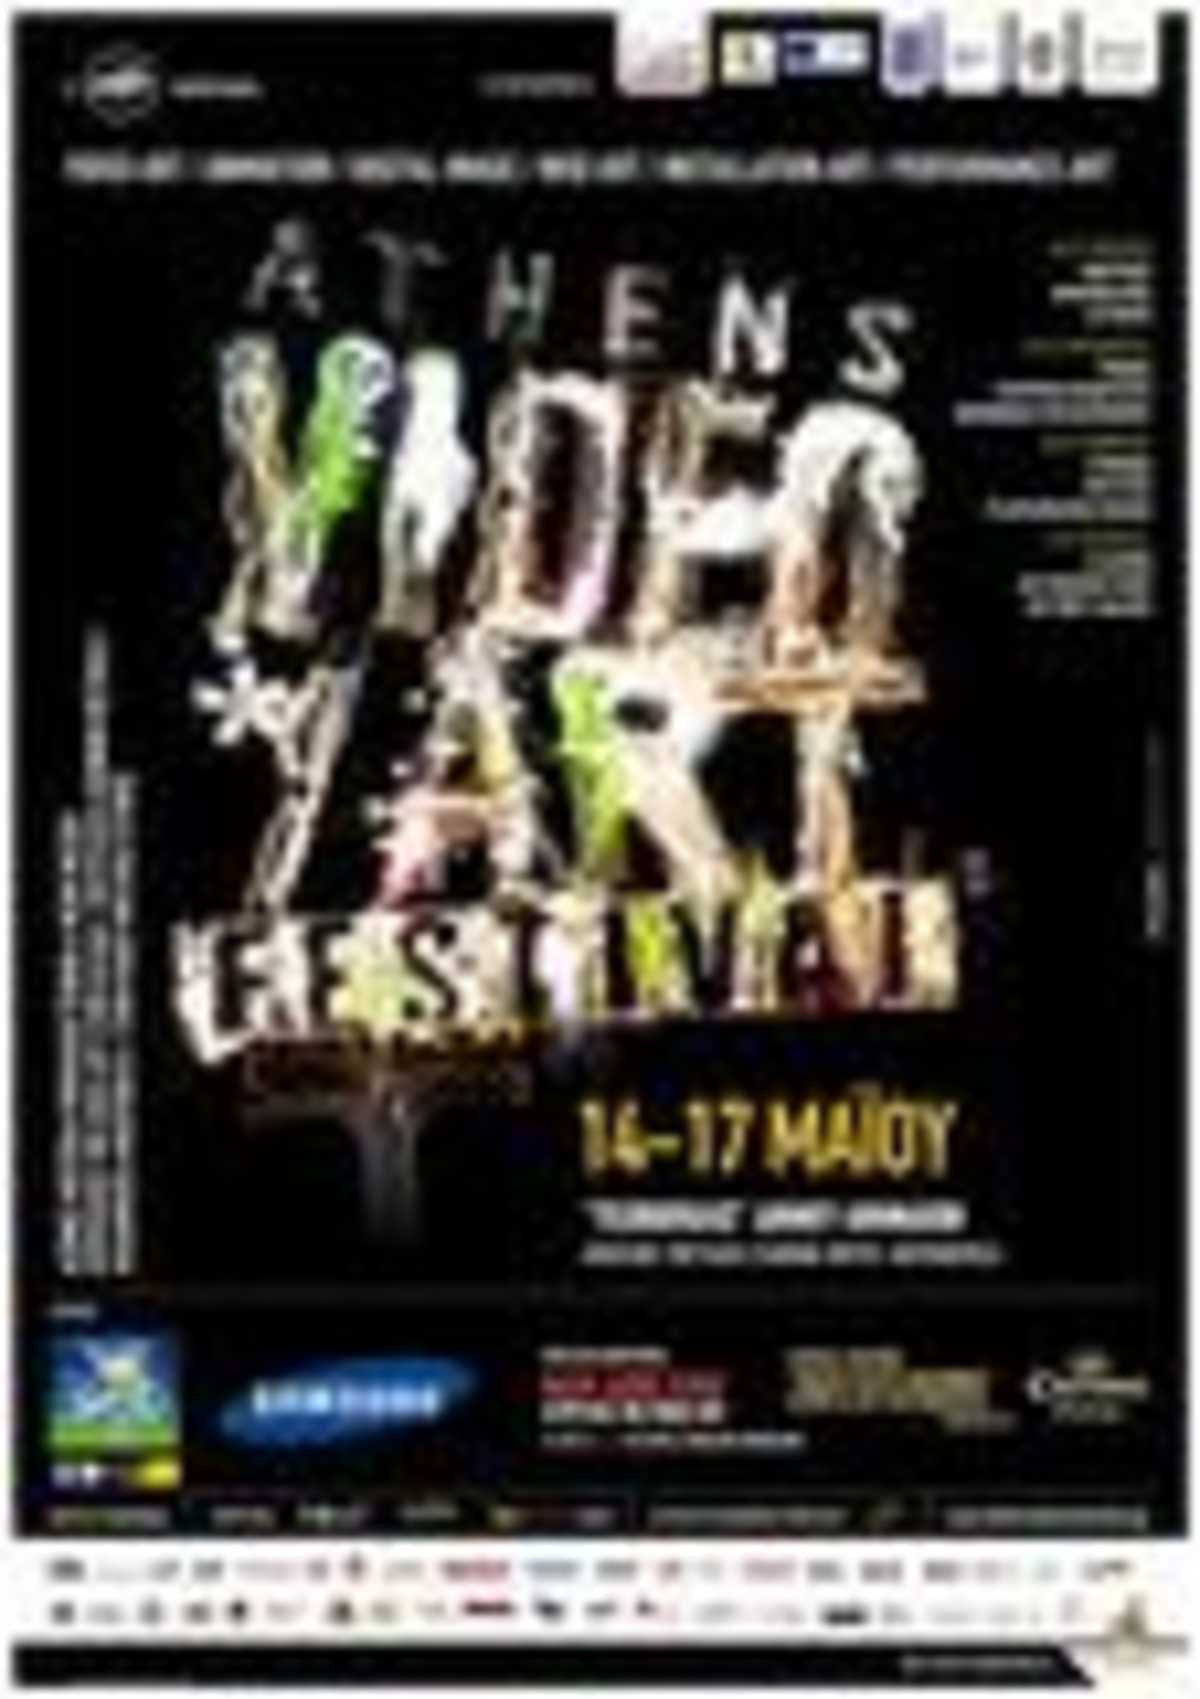 Athens Video Art Festival